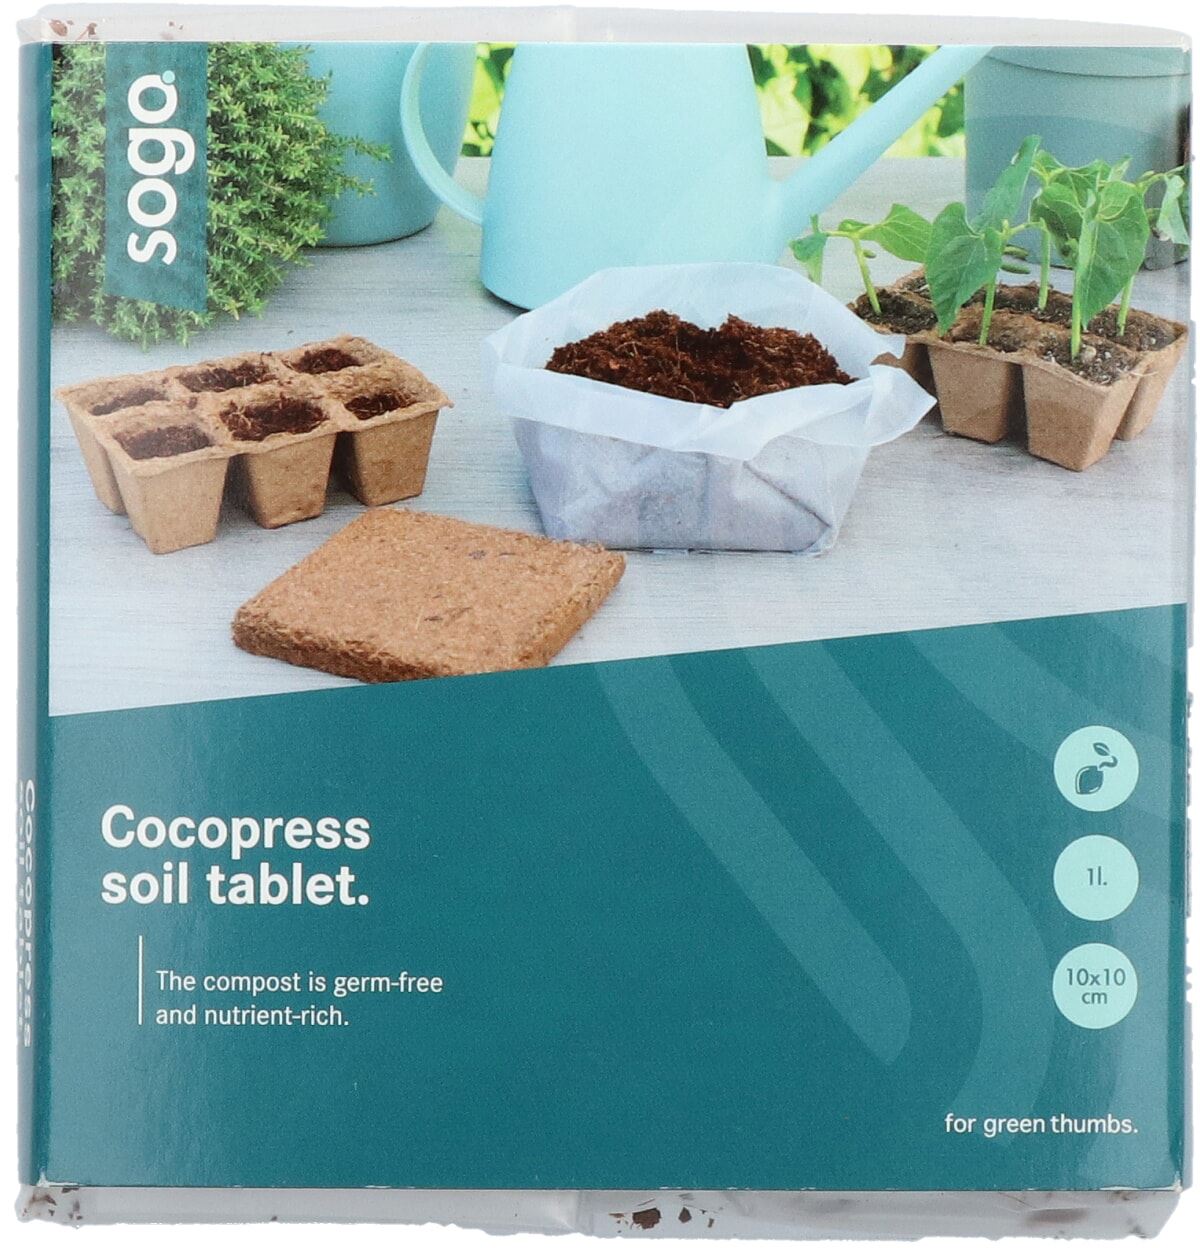 SOGO-Cocopress-tablet-1-liter-10x10cm-10-